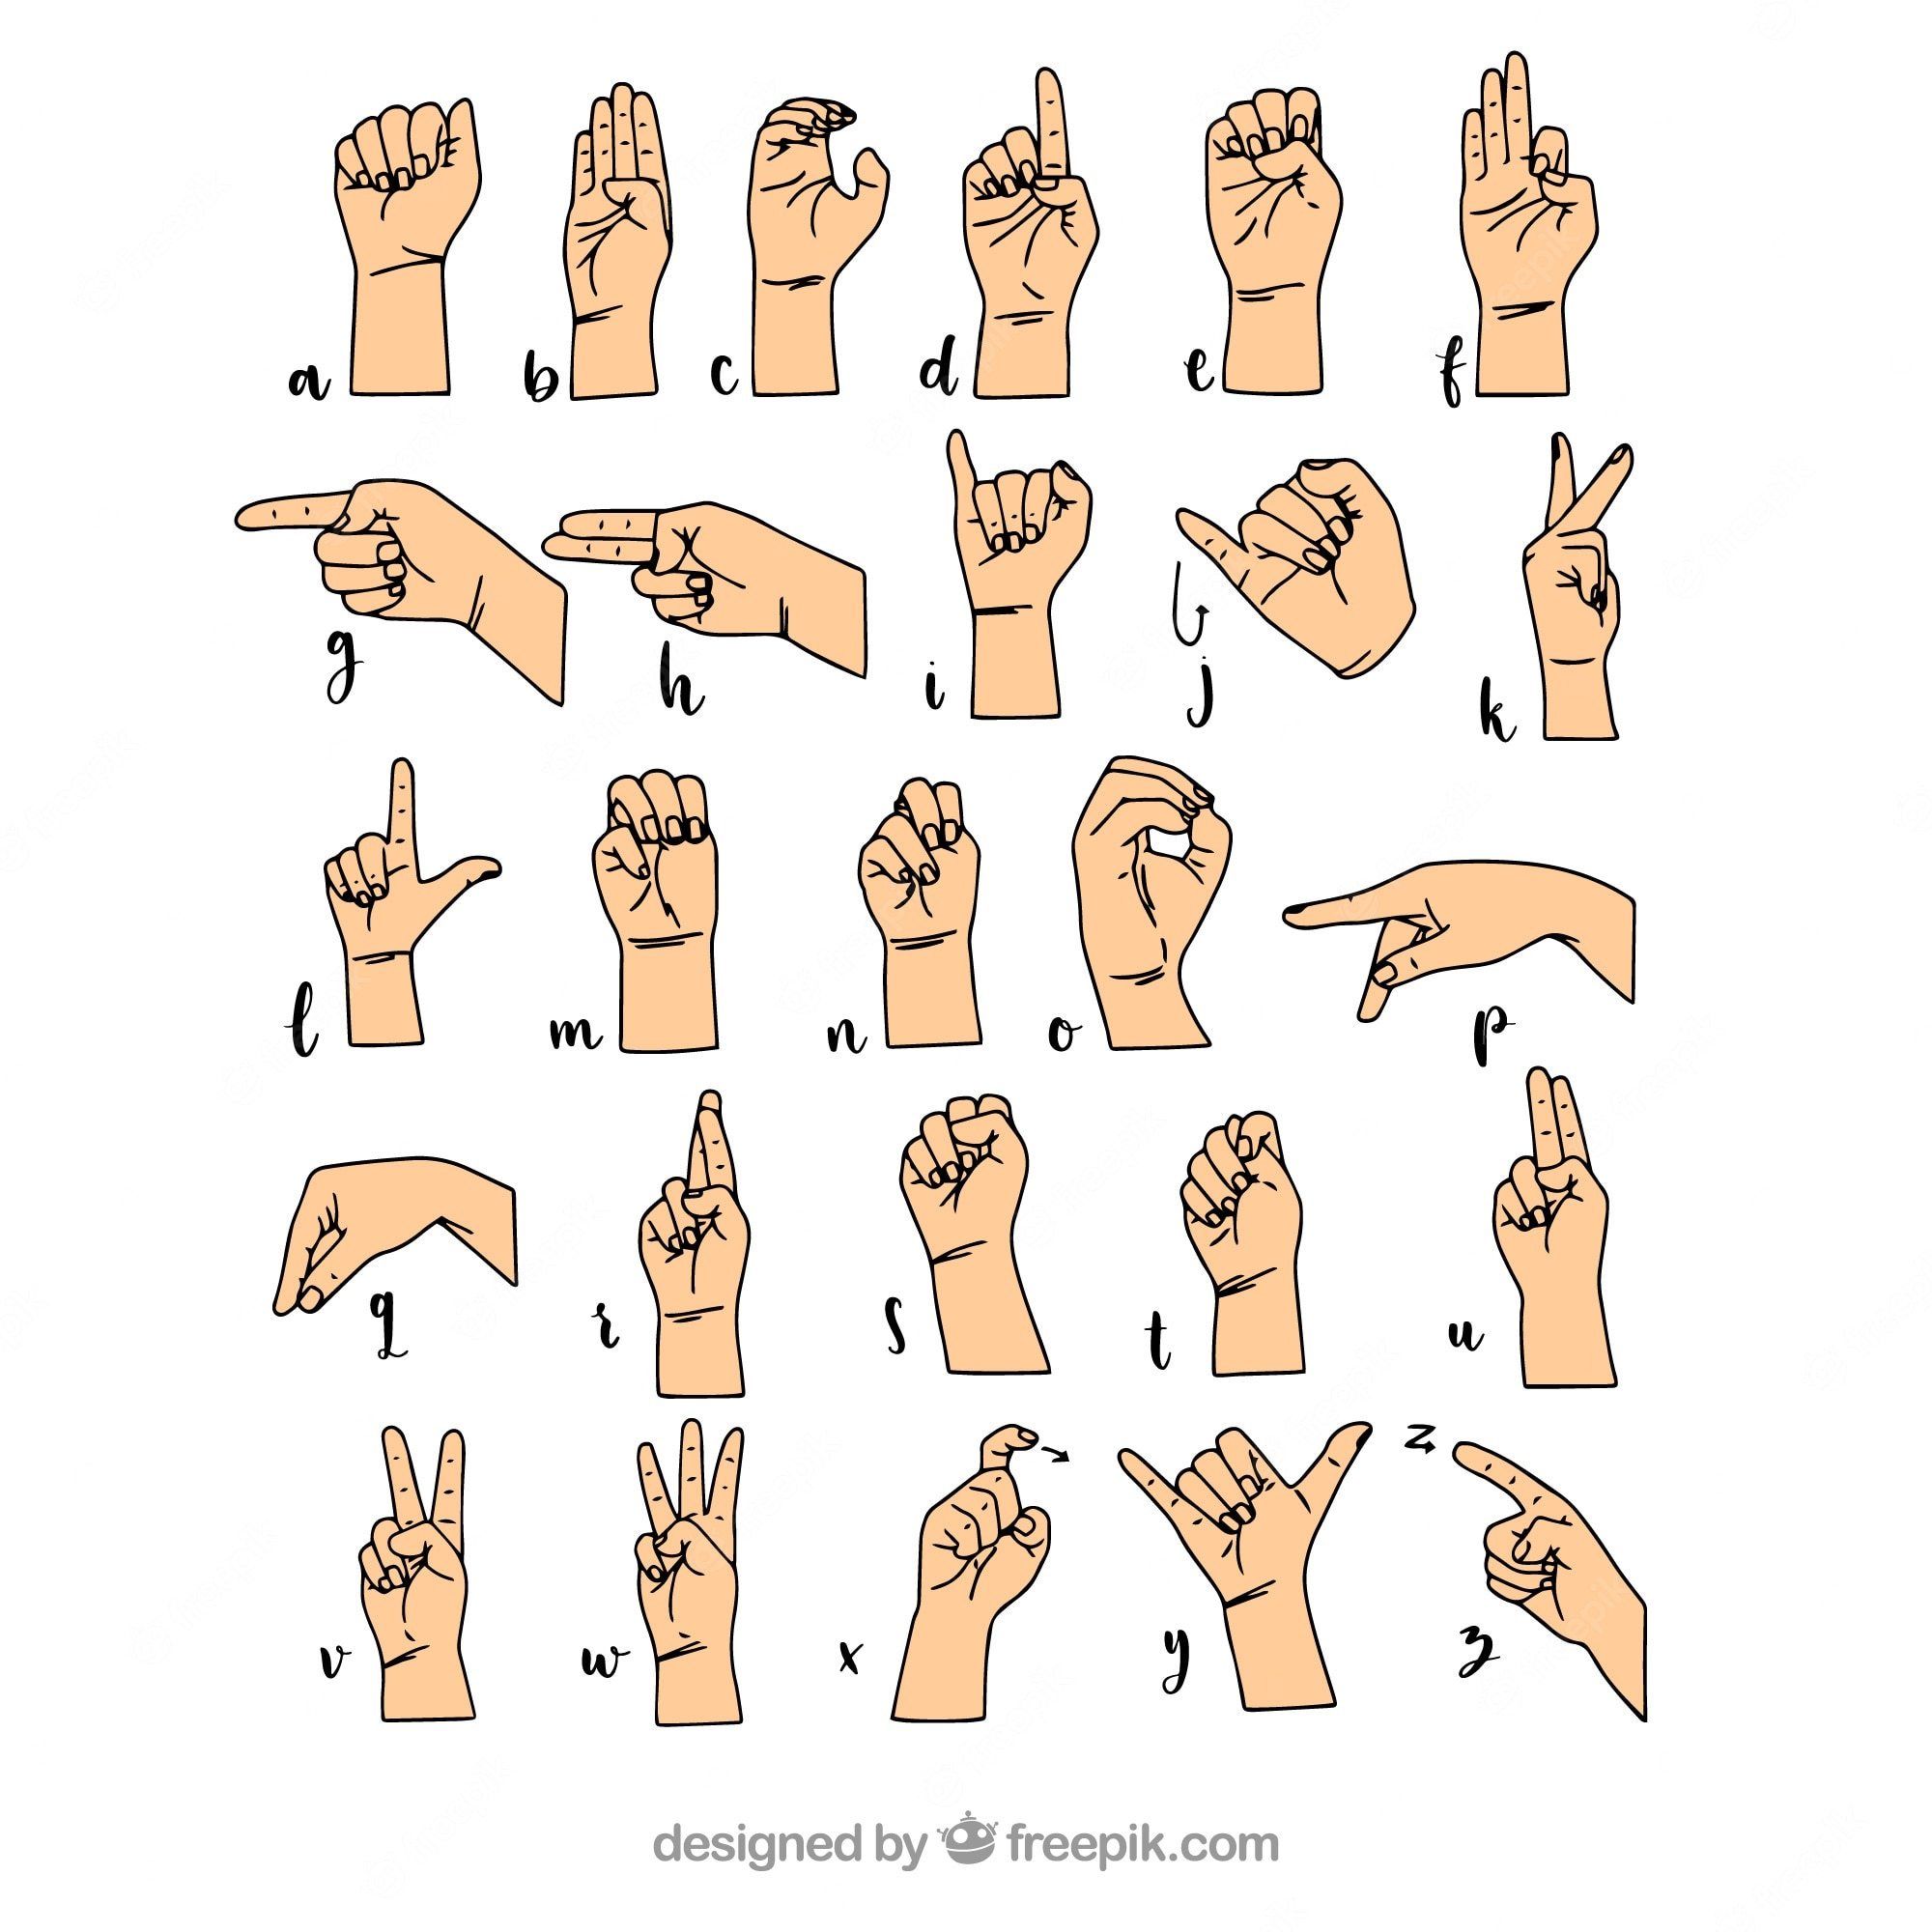 American Sign Language - Class 7 - Quizizz